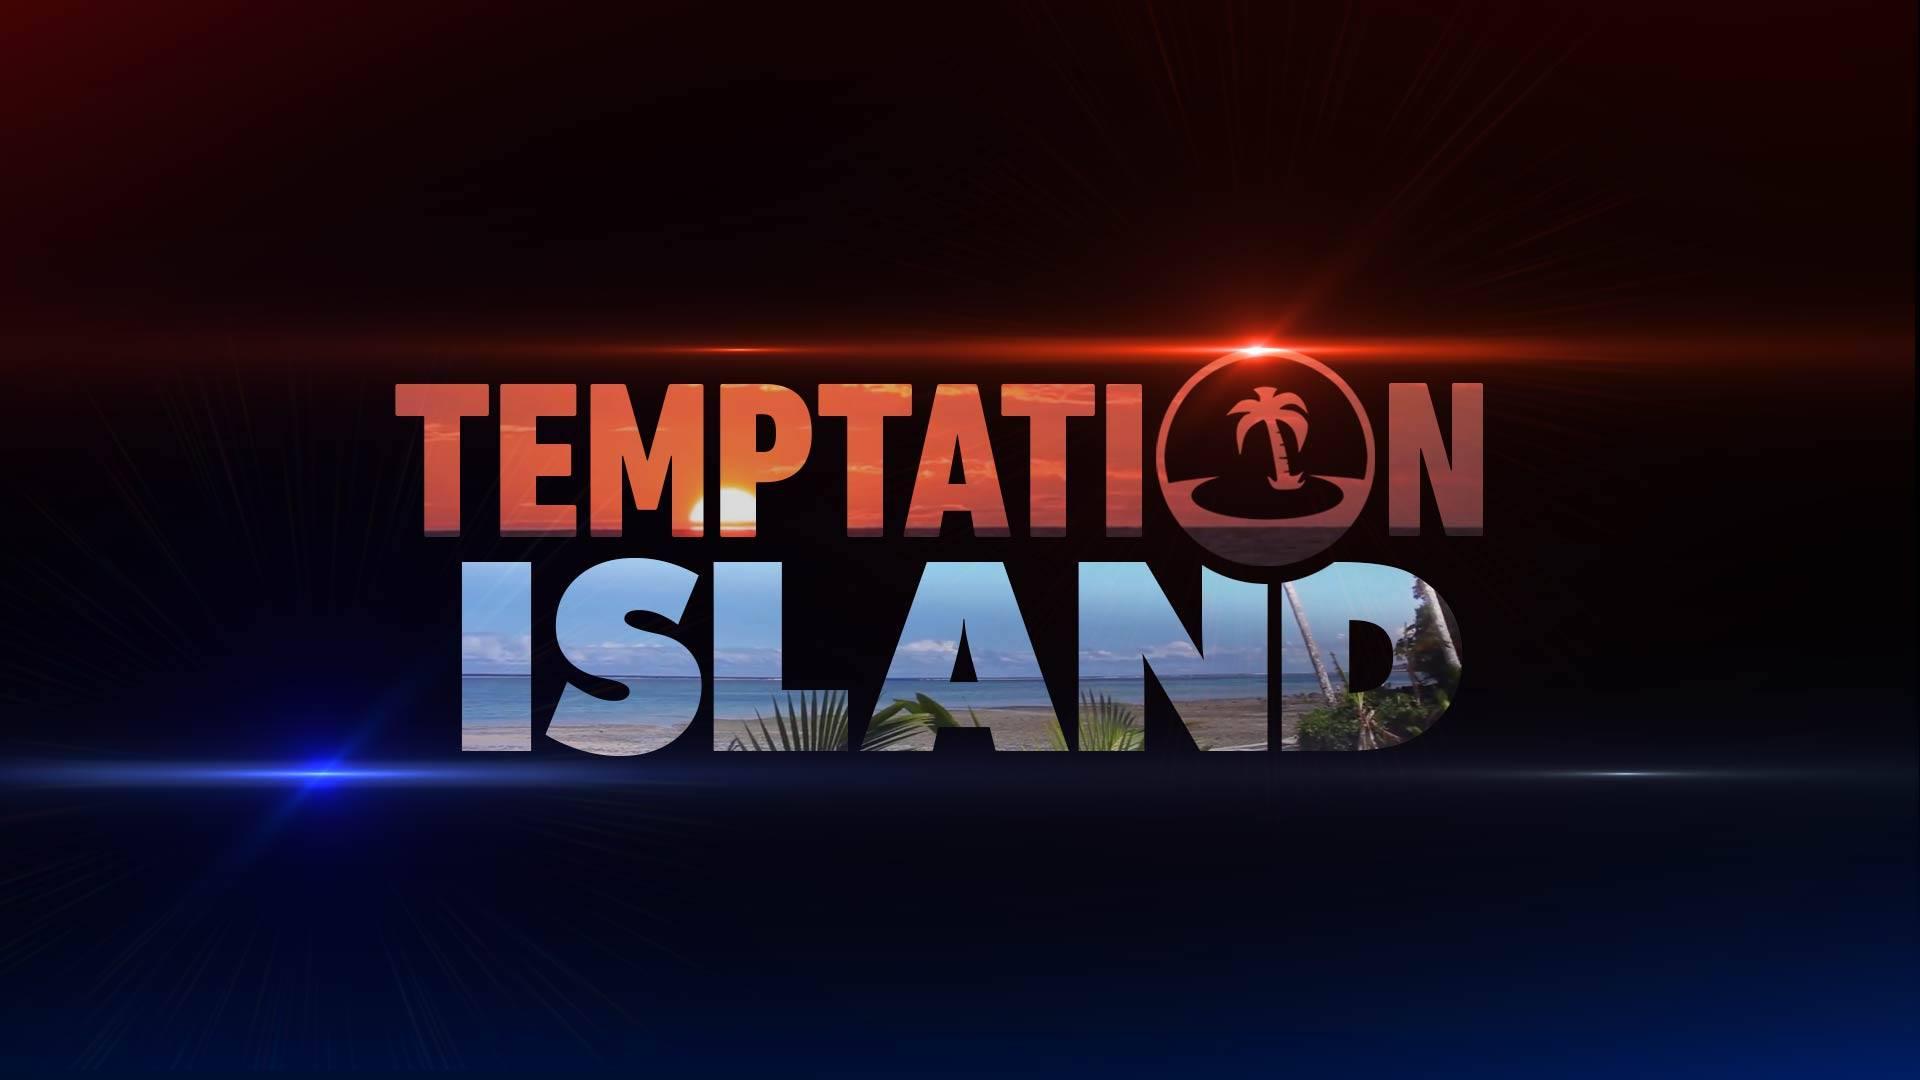 Temptation Island (IT)